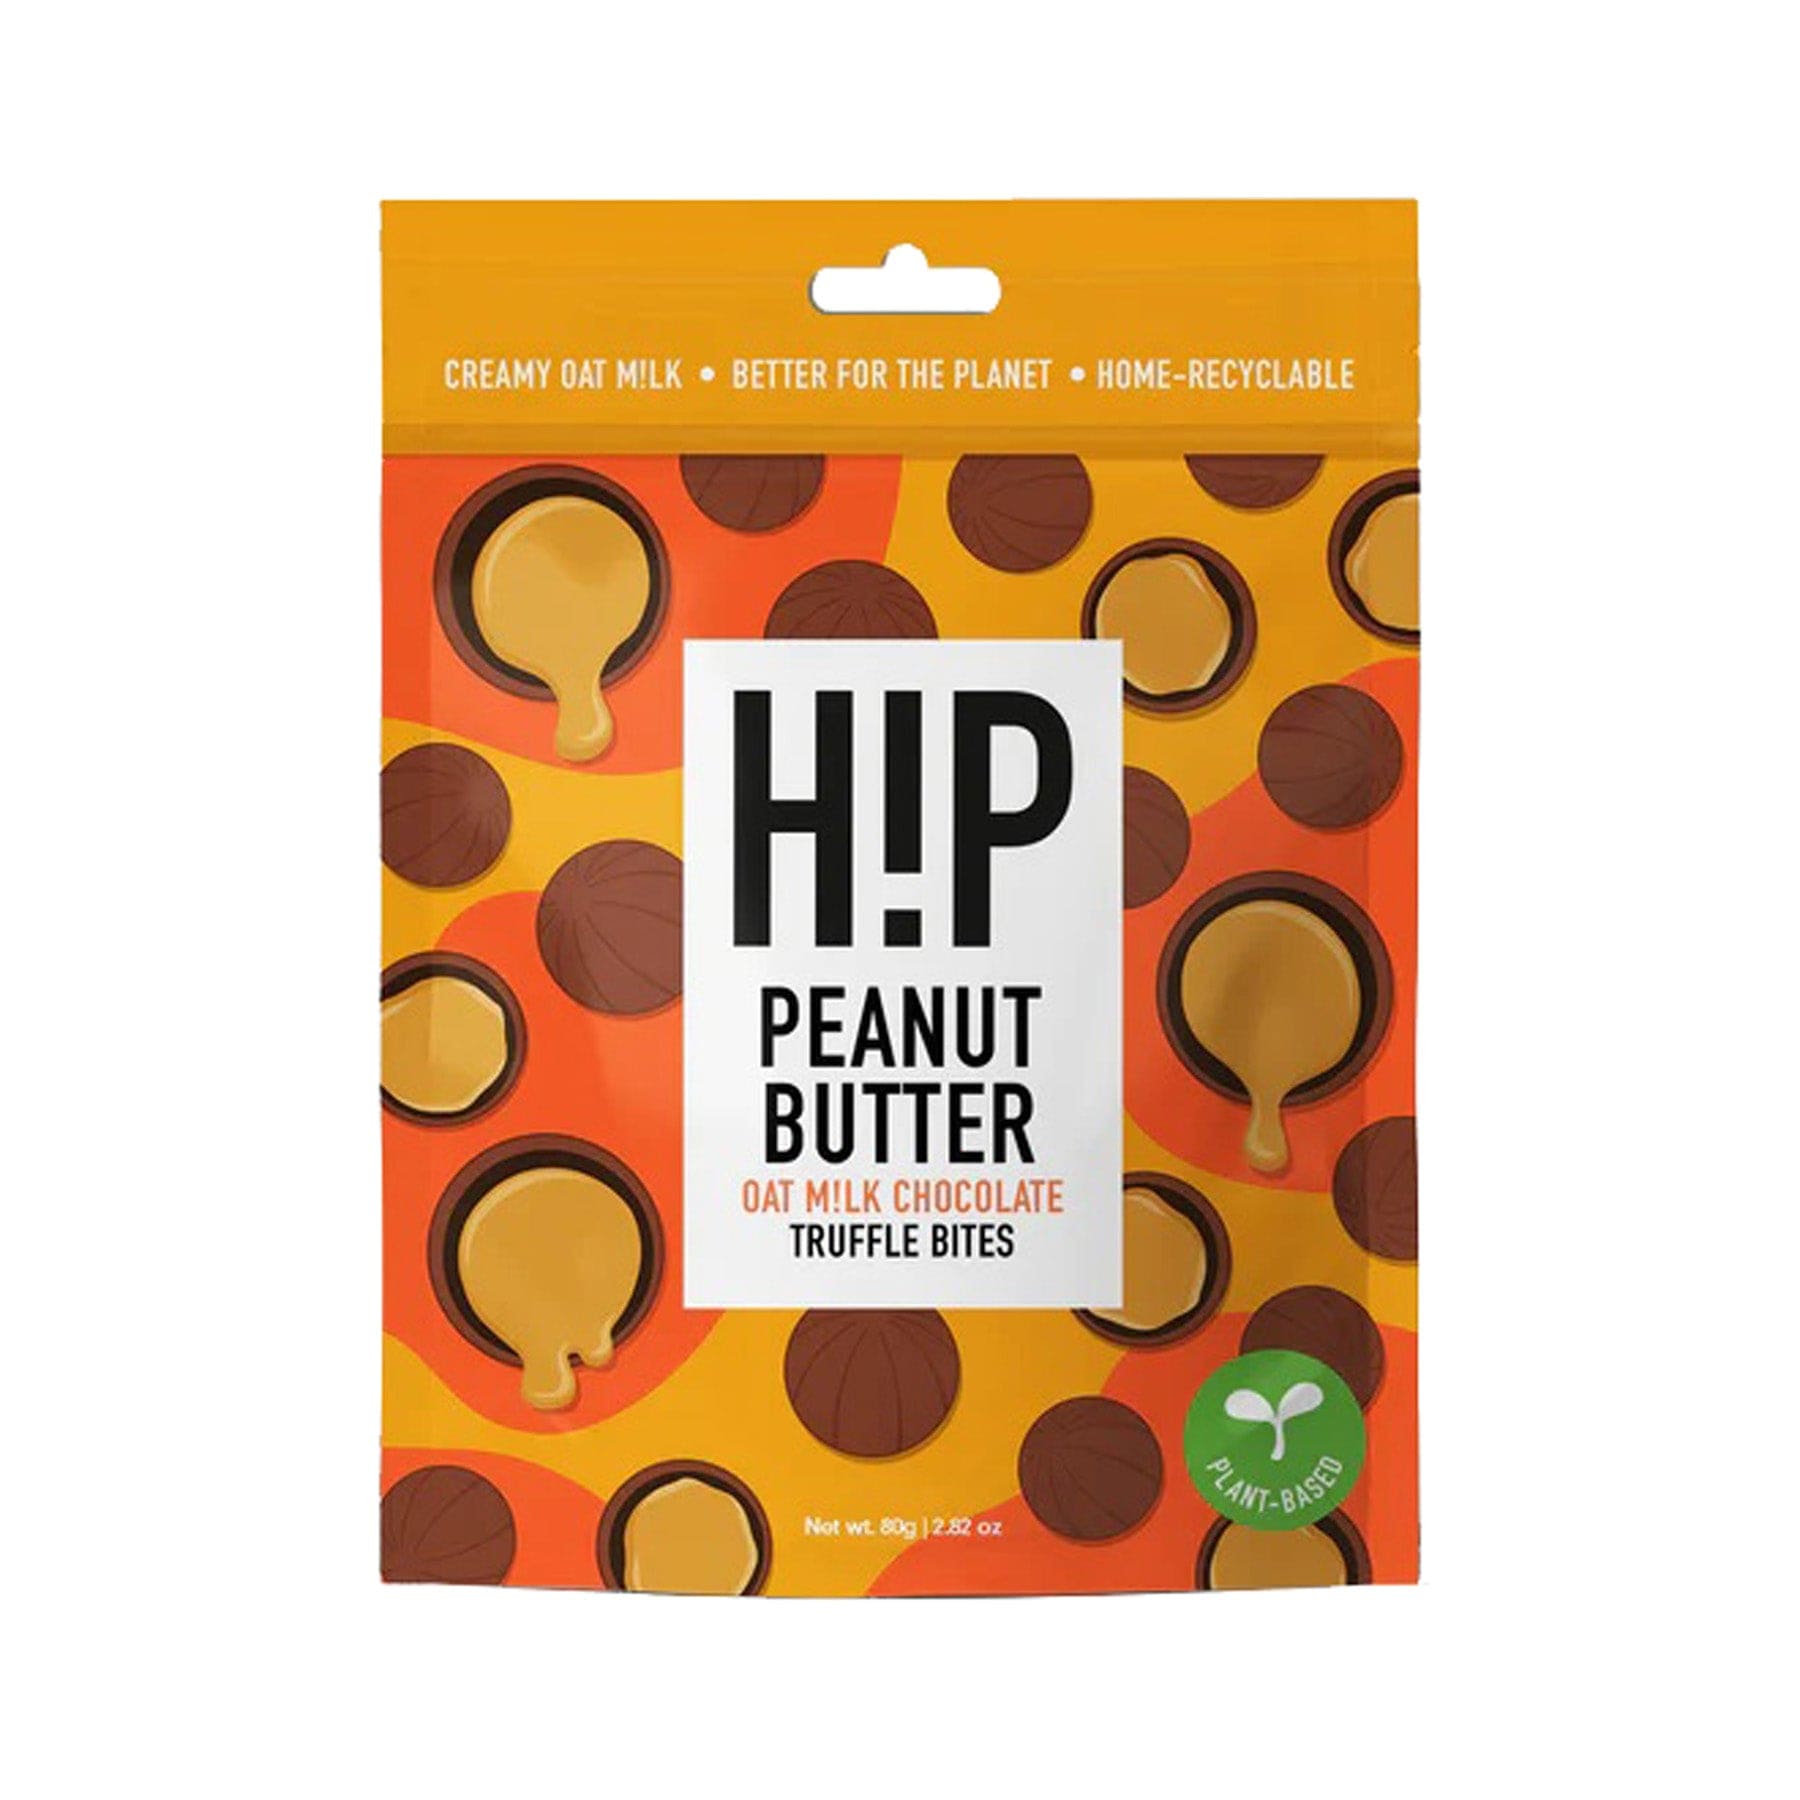 H!p peanut butter truffle bites 80g